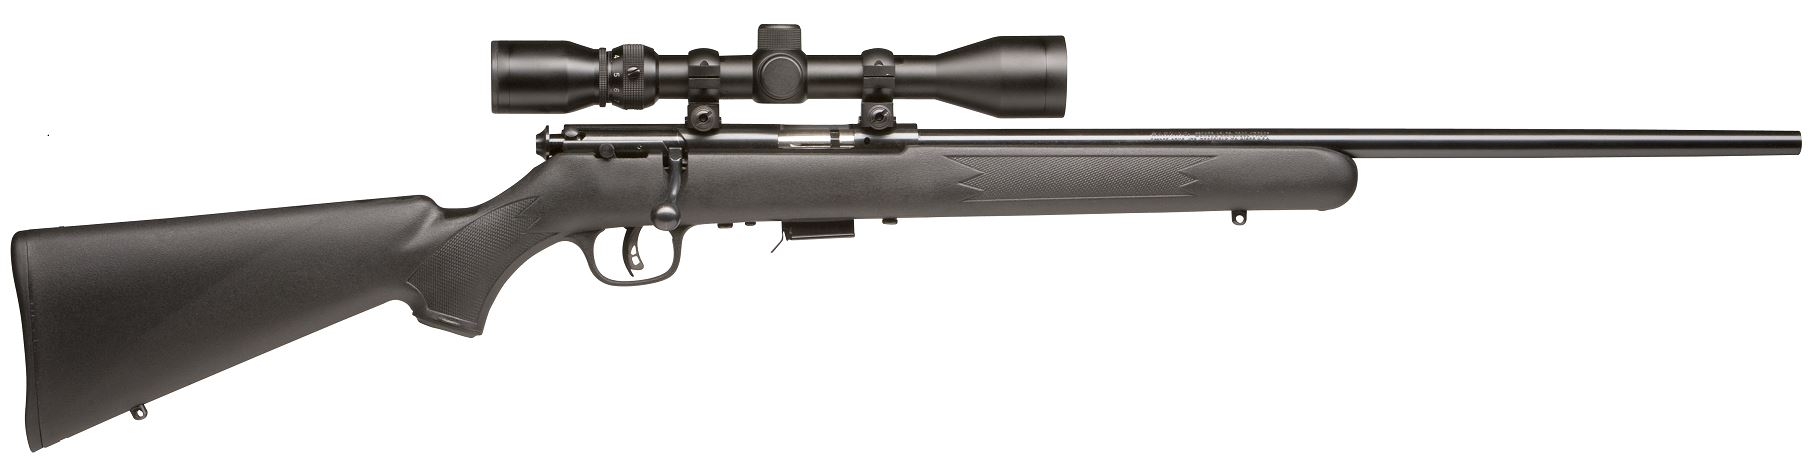 Savage Arms 93R17 FXP Repetierbüchse Model 96209